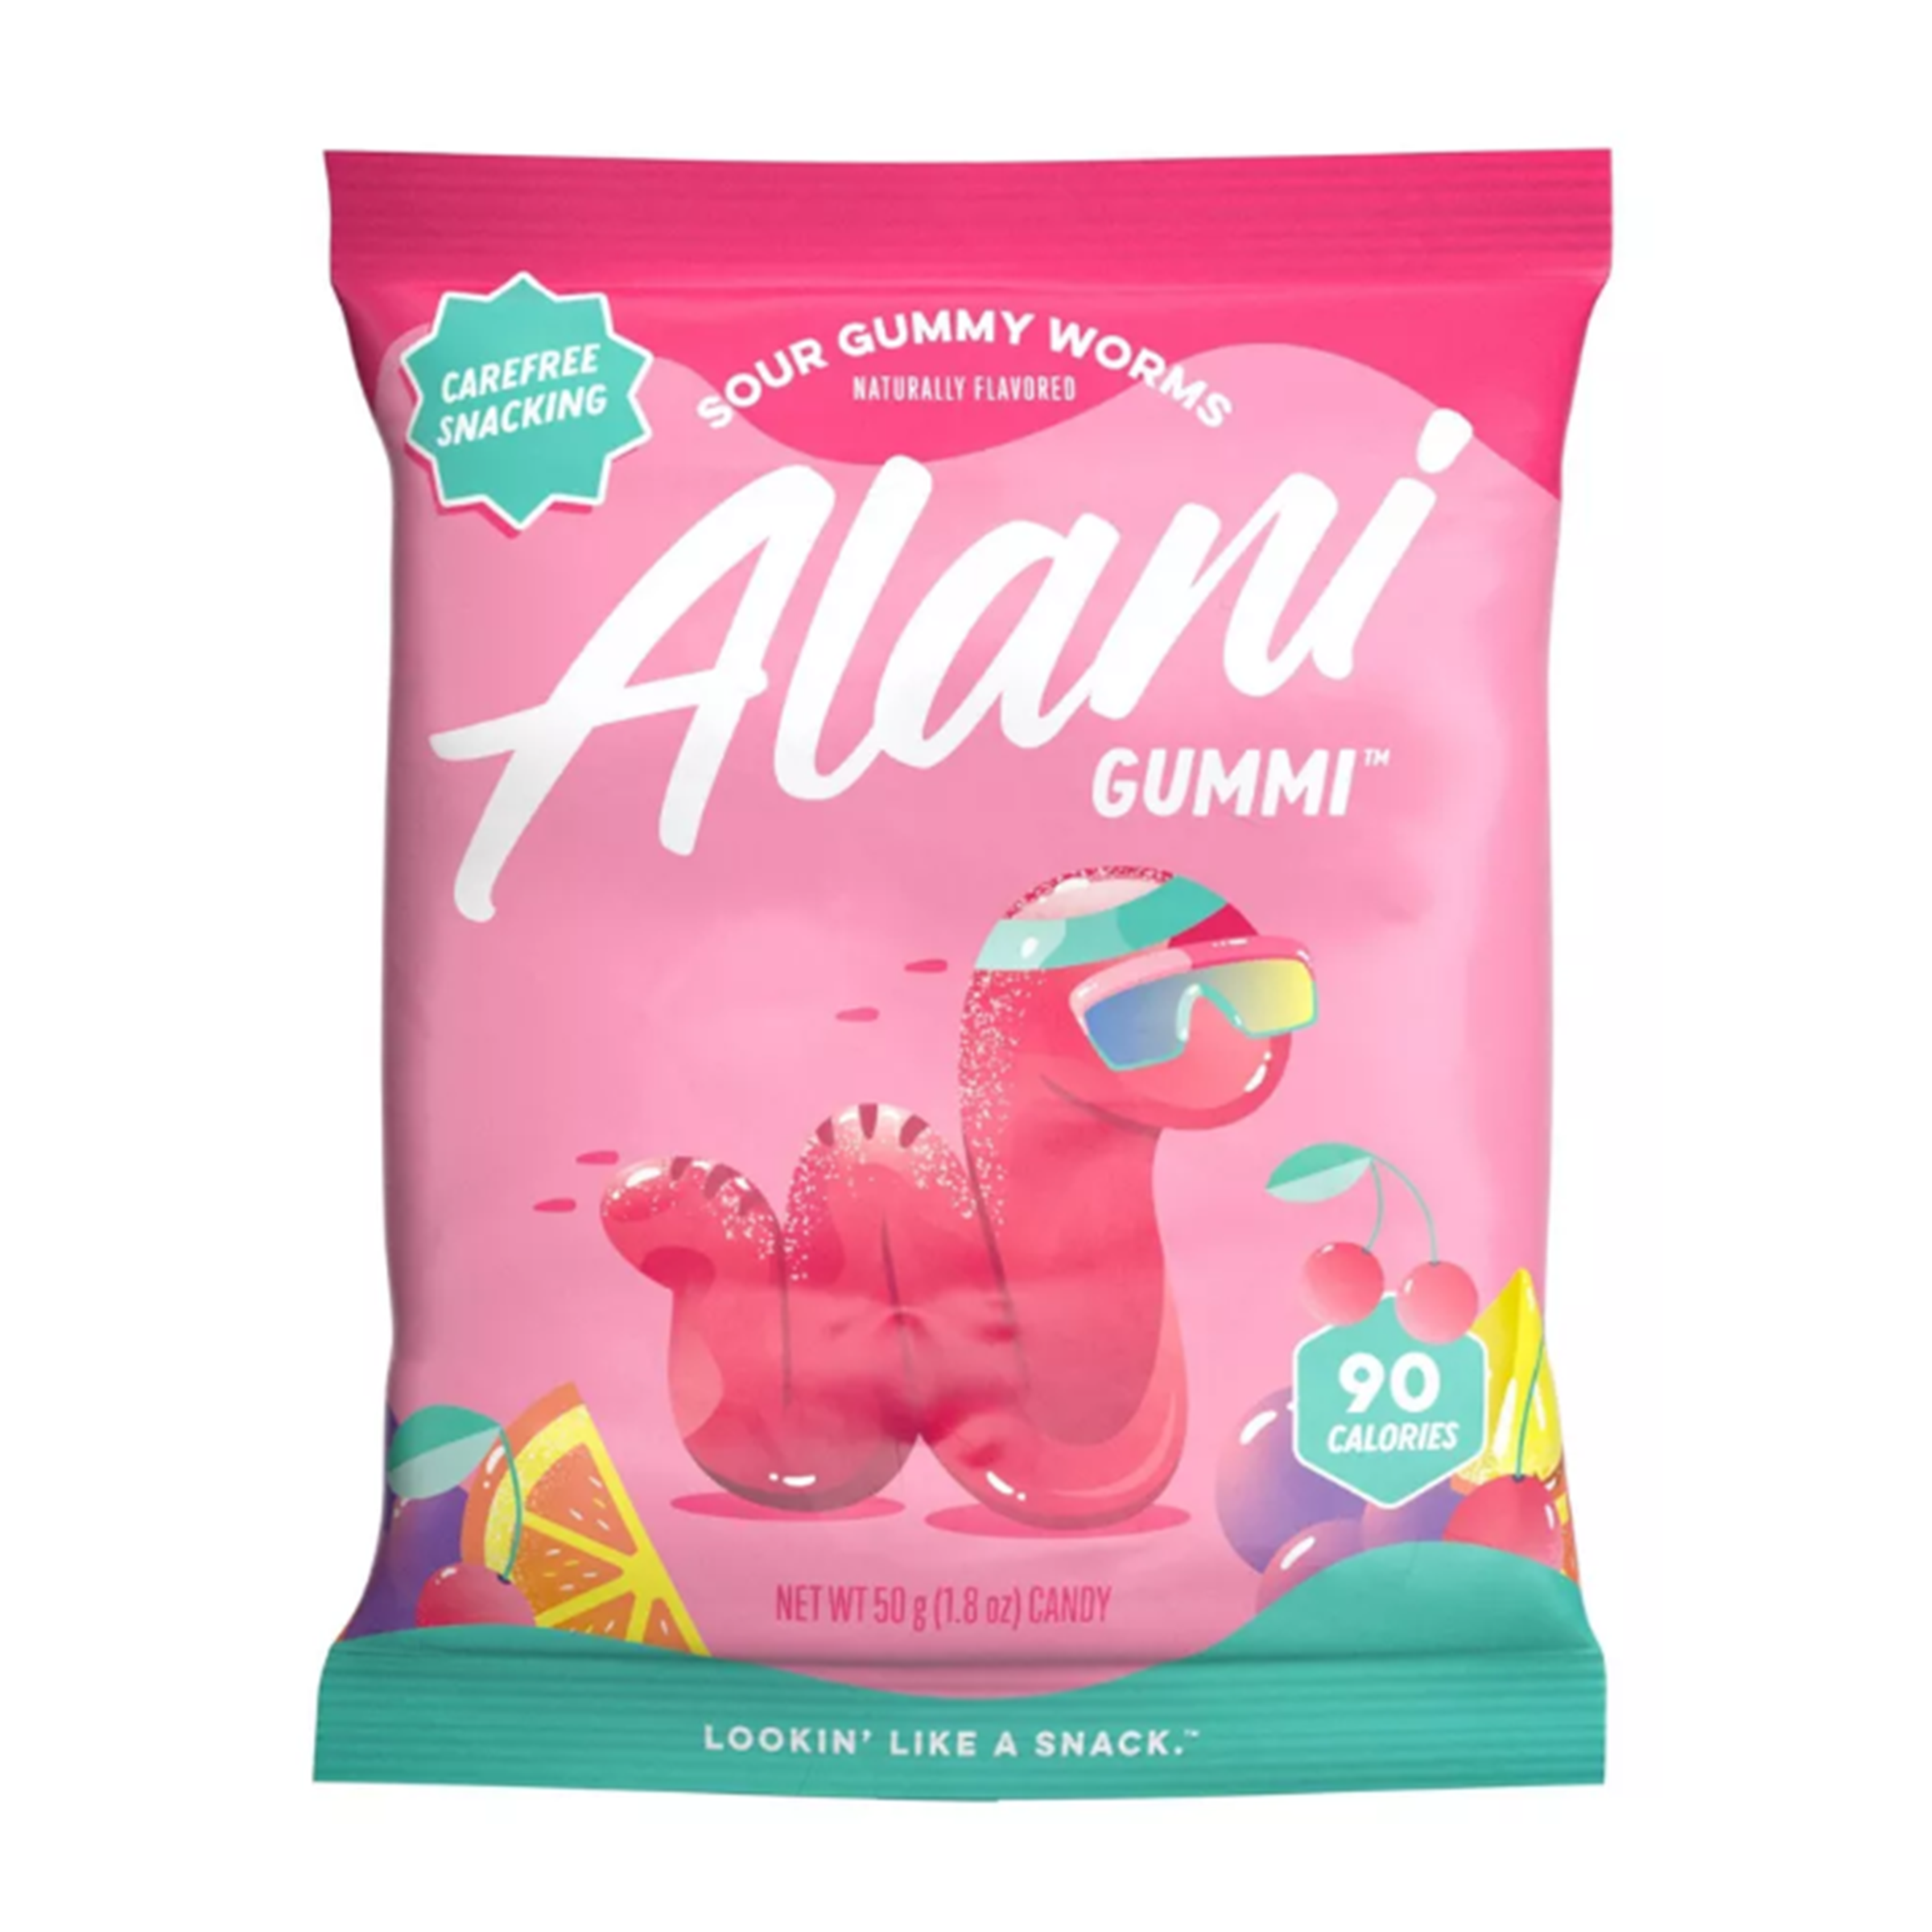 Alani Gummi - Sour Gummy Worms